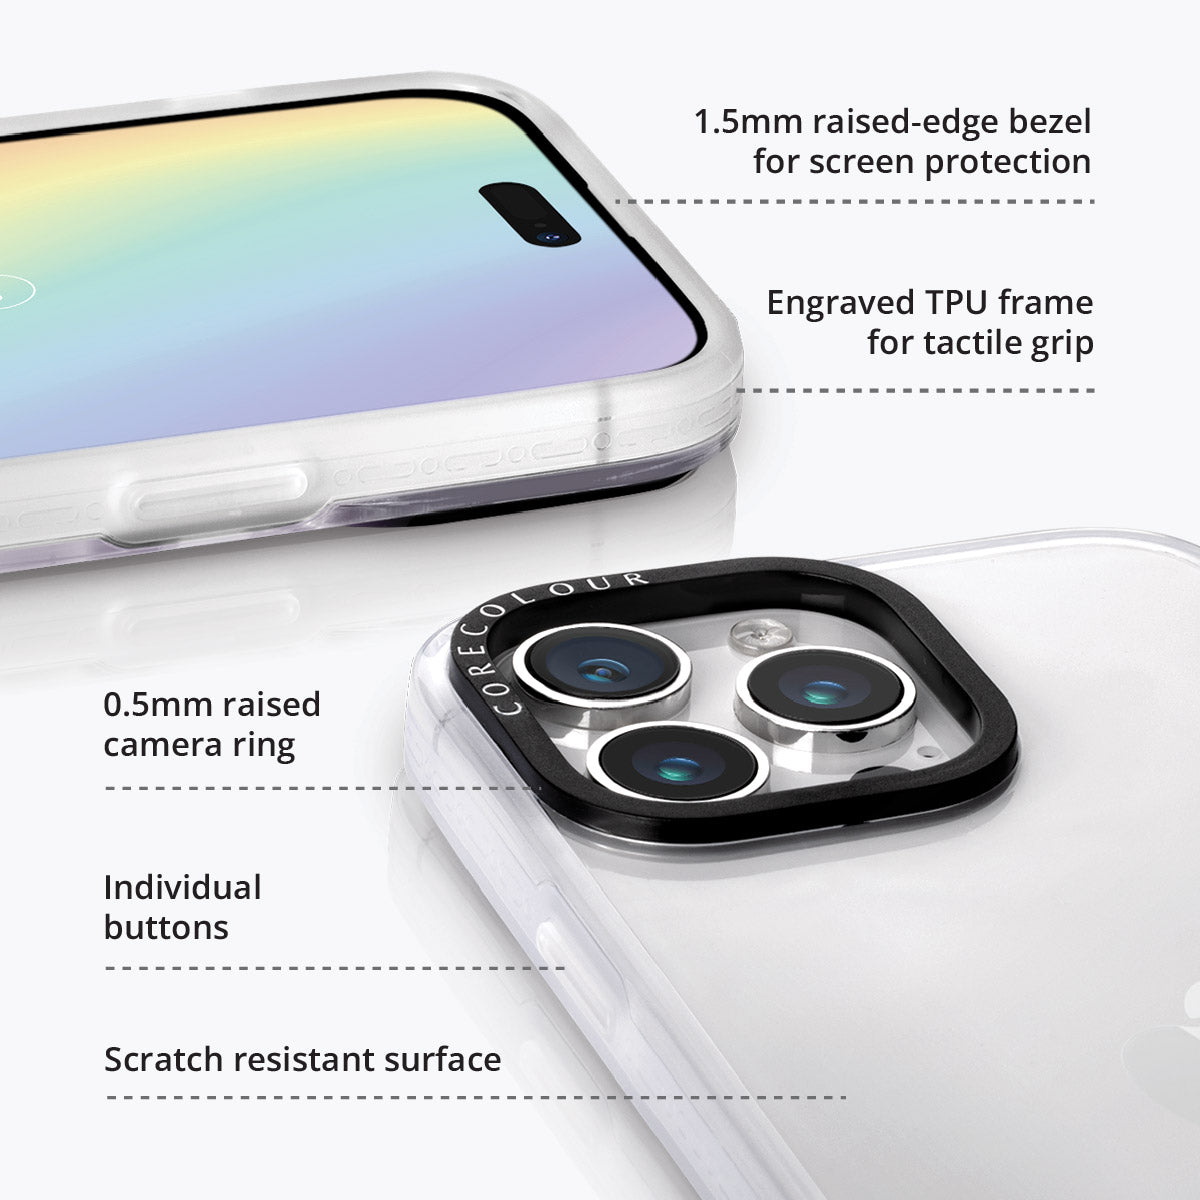 iPhone 12 Pro Max Colourful Leopard Glitter Phone Case Magsafe Compatible - CORECOLOUR